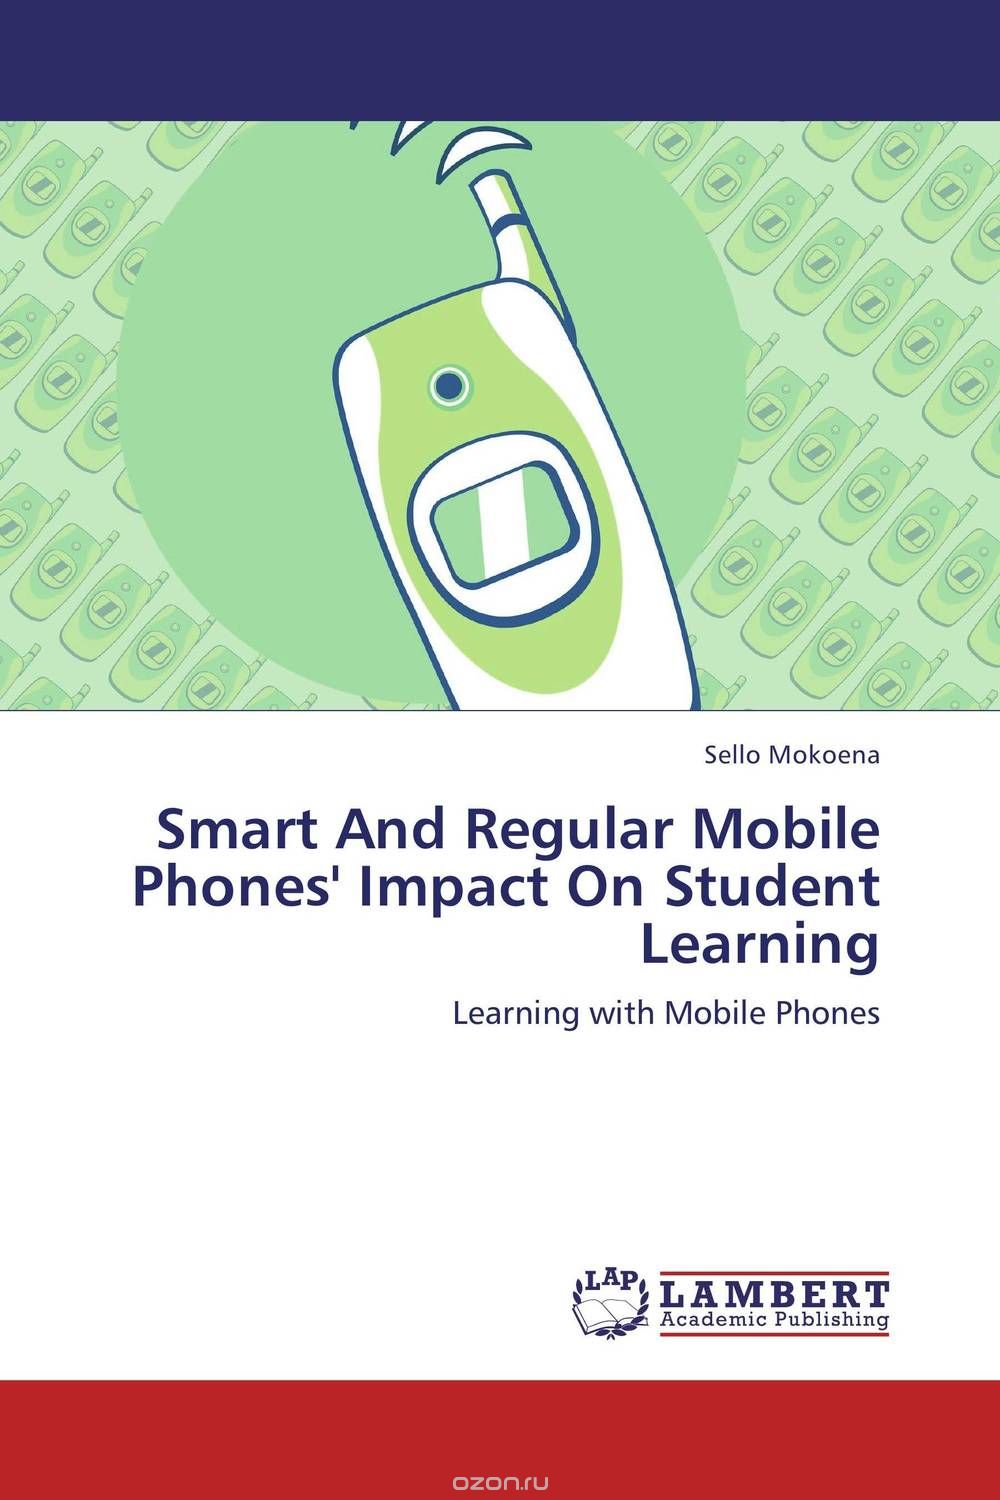 Скачать книгу "Smart And Regular Mobile Phones' Impact On Student Learning"